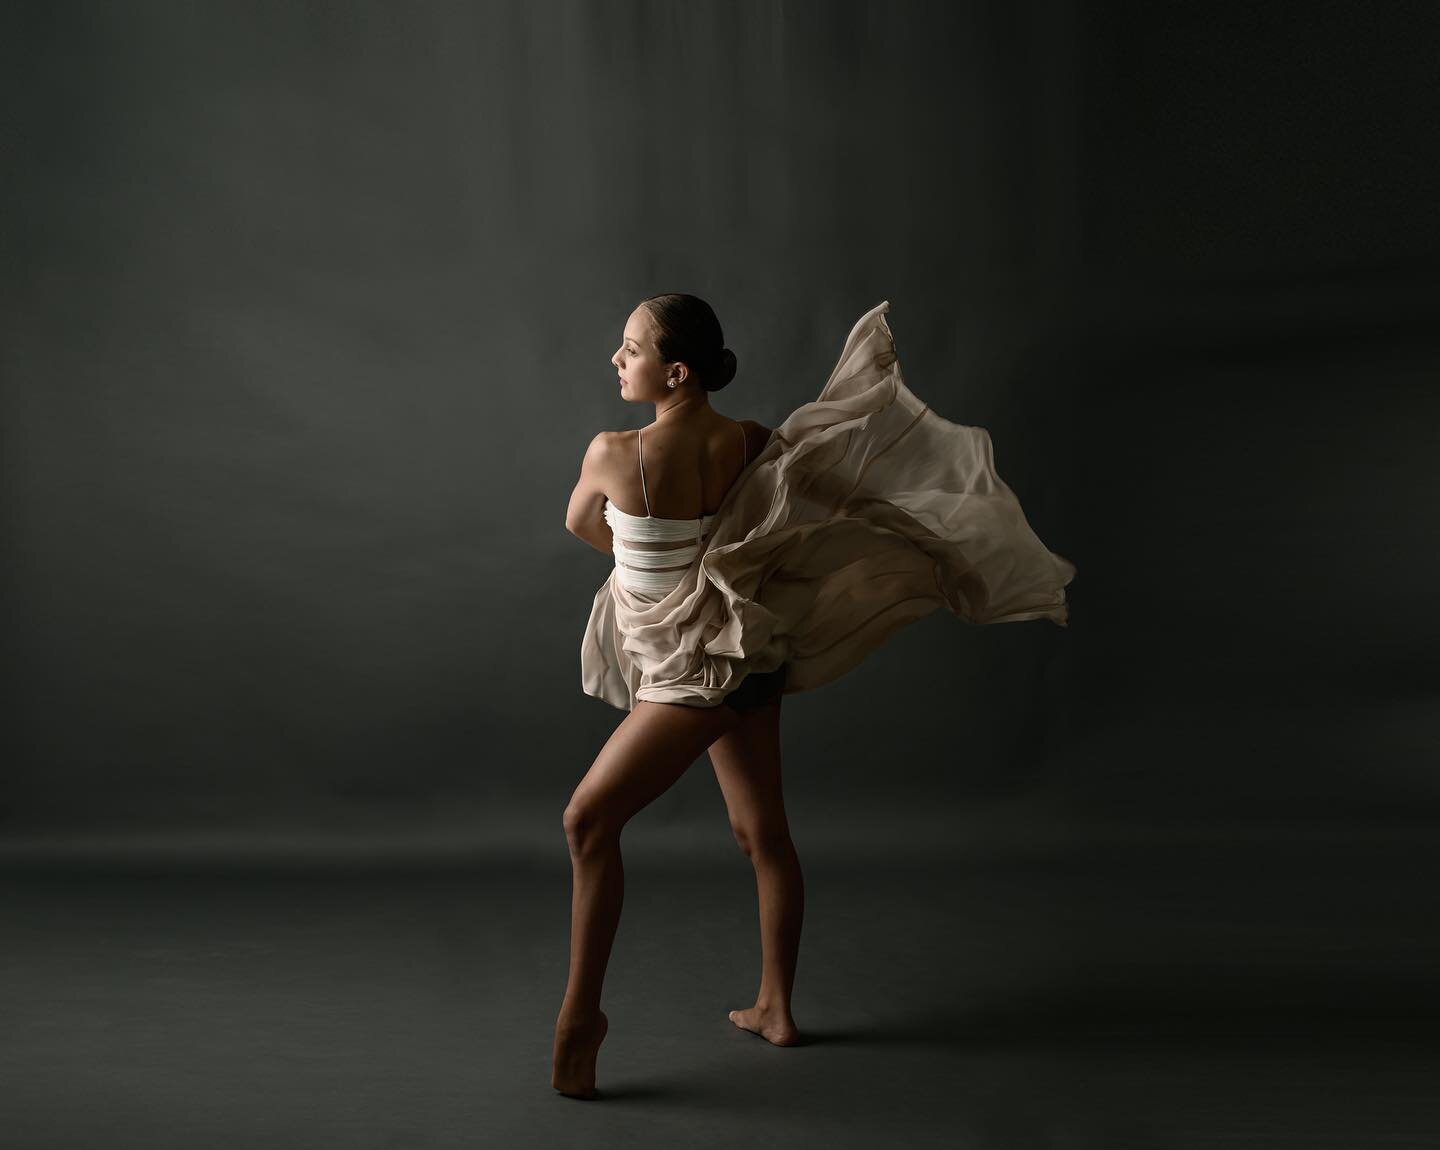 Meet Leila Skye Gulli @dancer.leila #dancer @eliteacademyofdance #dancersofinstagram #dance #dancersofinstagram @vilmarodriguezphotography #studiophotography #ig_worcester #iloveworcester